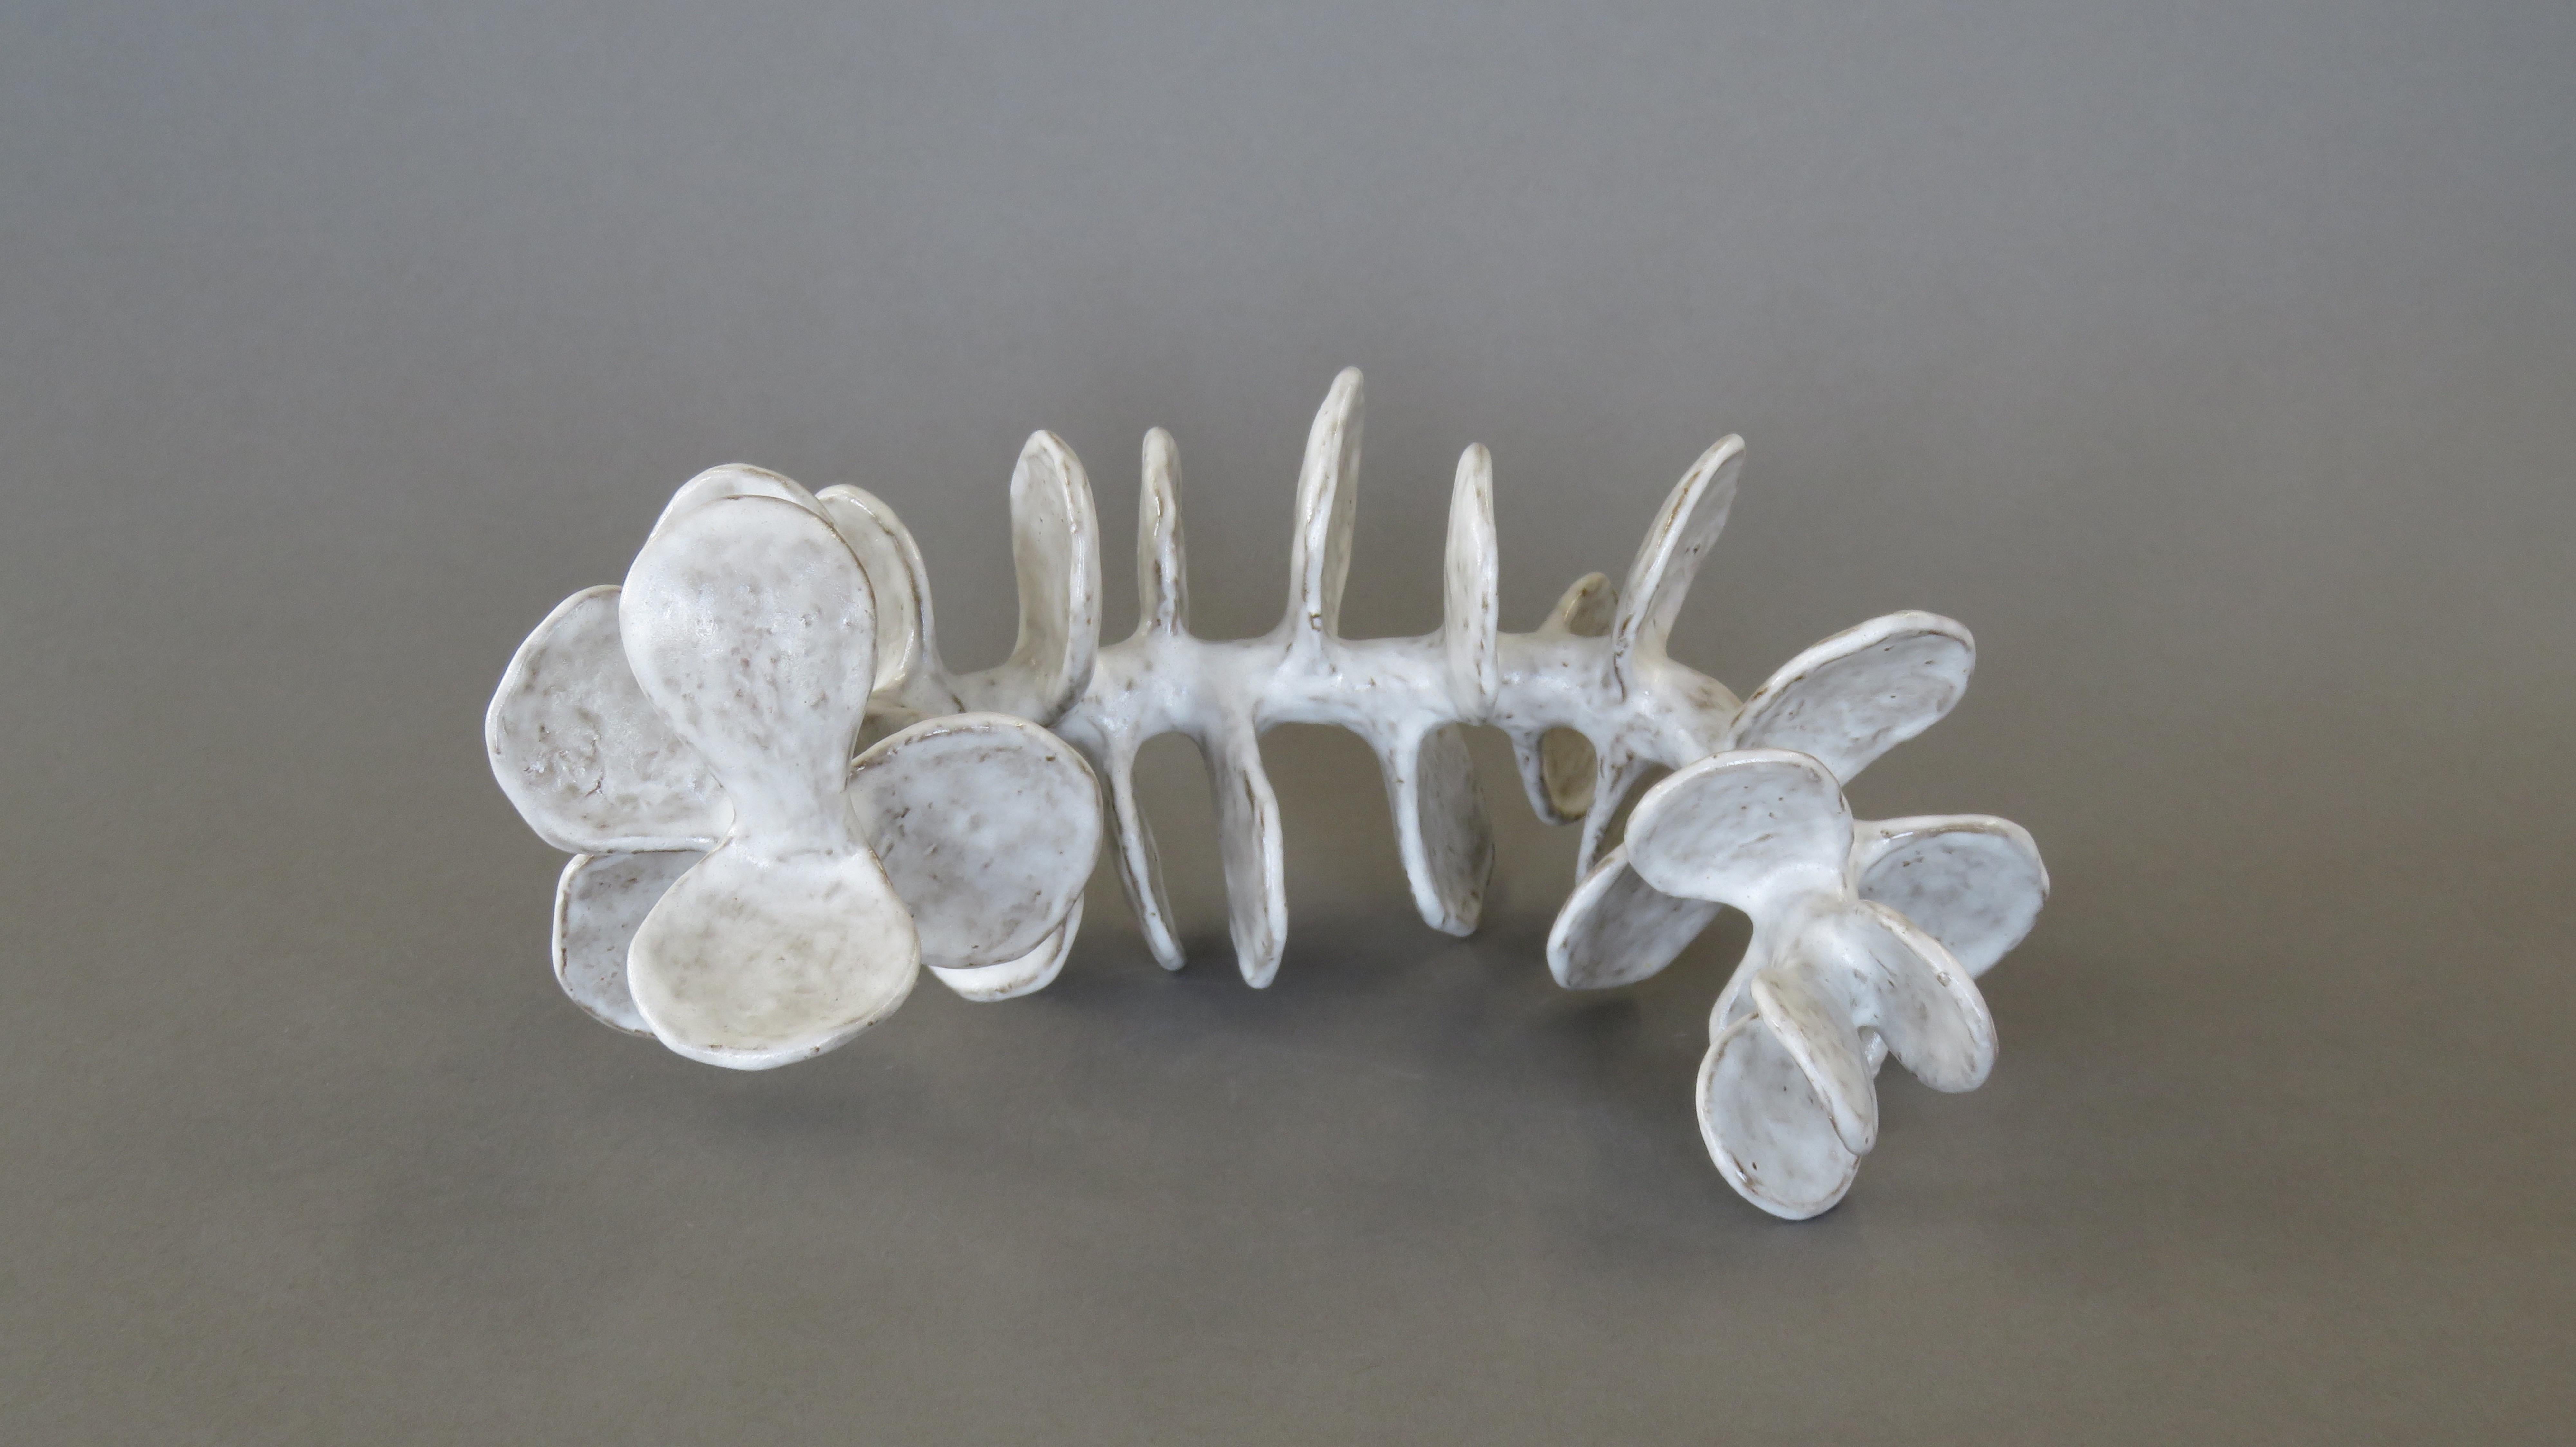 Handgefertigte Keramik-Skulptur:: Liegende Skelett-Wirbelsäule in gesprenkeltem Weiß 7